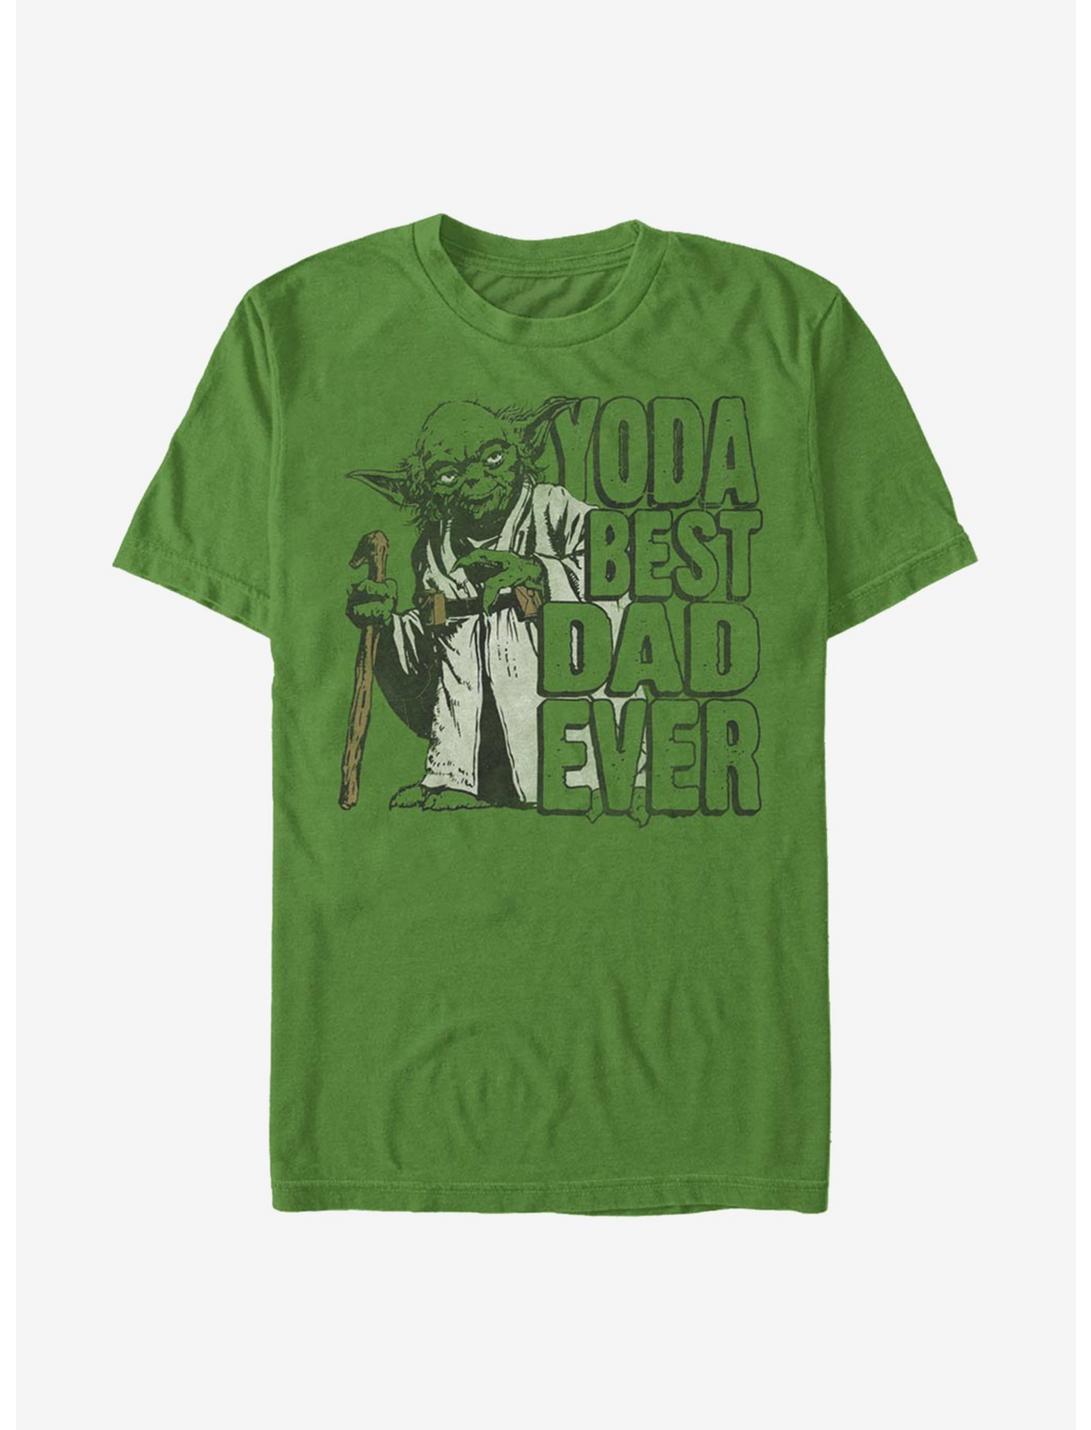 Star Wars Yoda Best T-Shirt, KELLY, hi-res